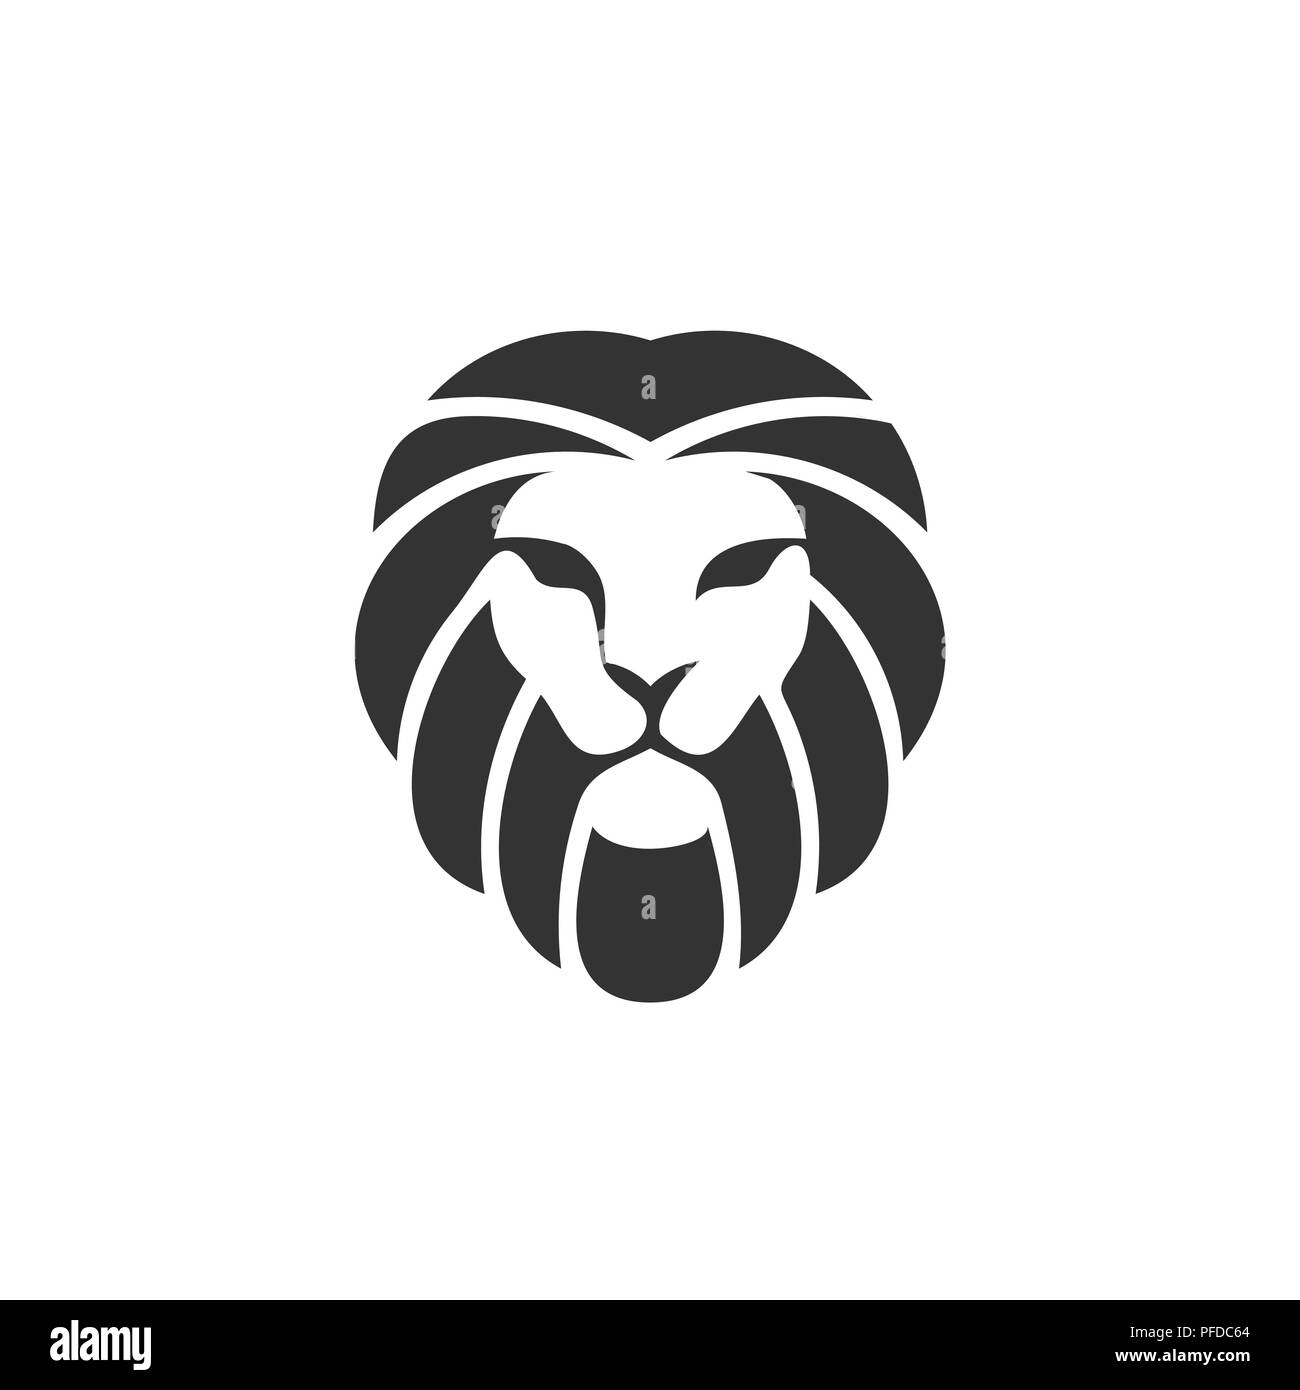 creative simple flat emblem lion king logo vector, Lion logo design template. wildlife or zoo icon. Stock Vector